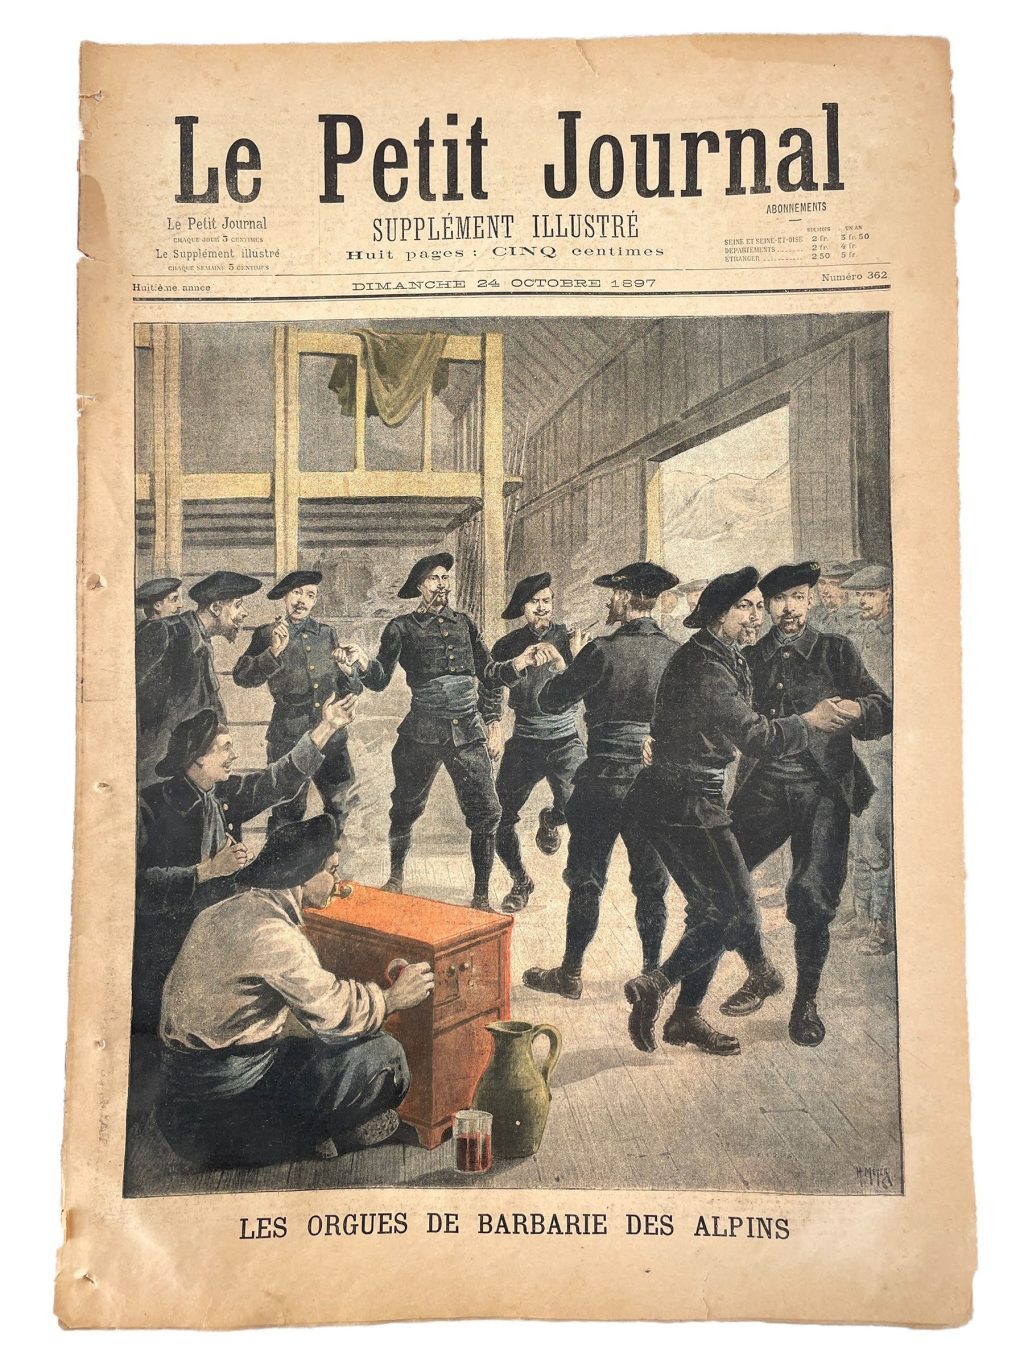 Antique French Le Petit Journal Newspaper Supplement Illustre Number 362 24/10/1897 Illustrations 8 Pages Memorabilia Collector c1897